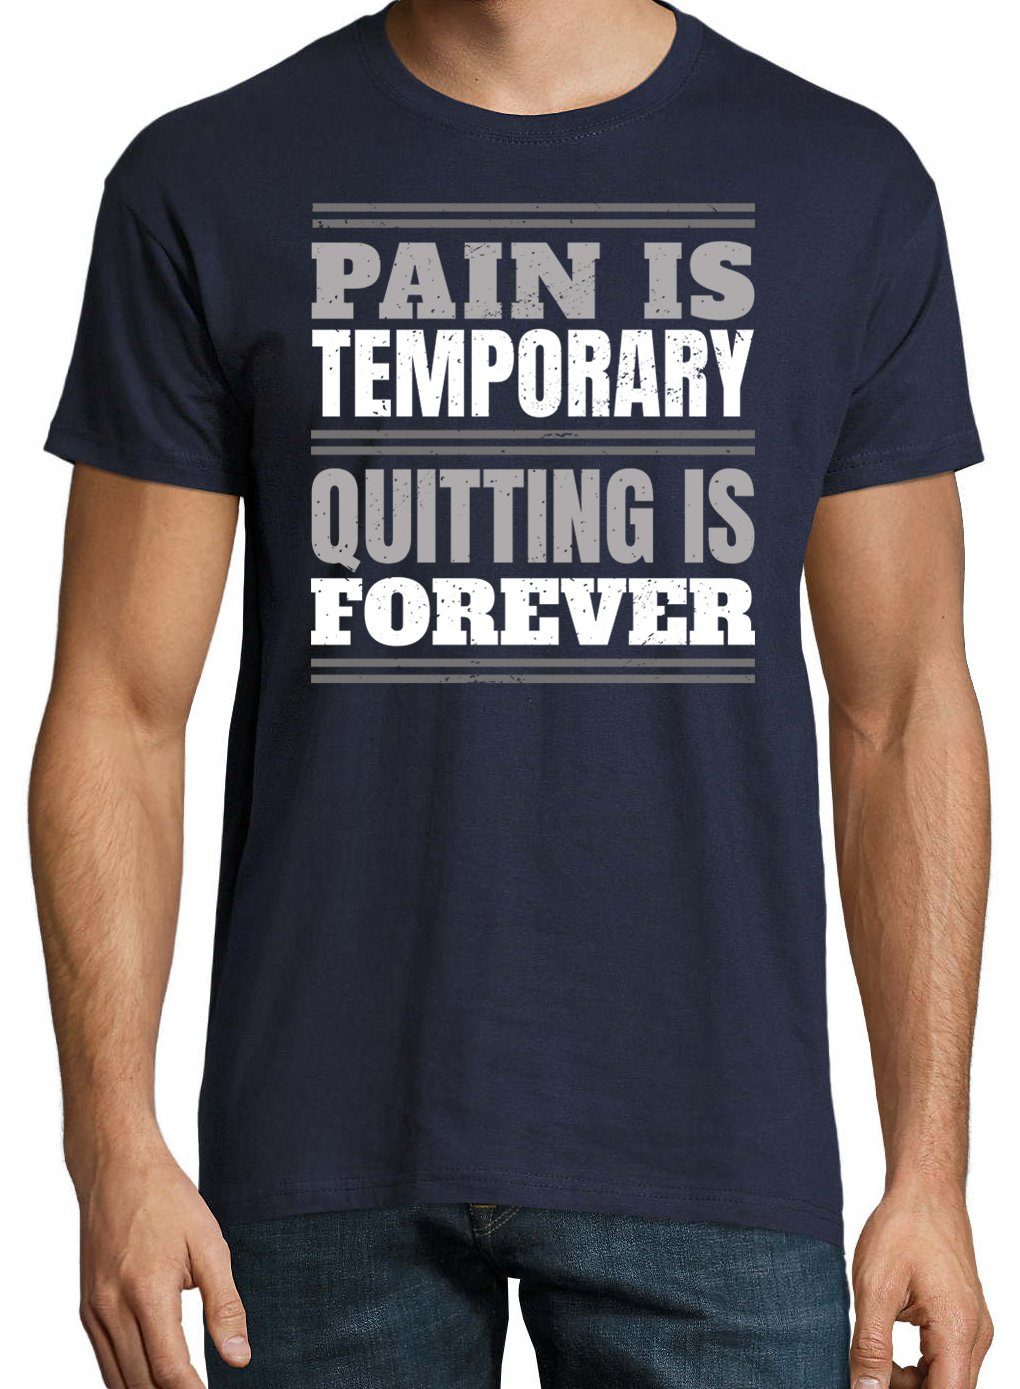 TEMPORARY, Trendigem IS Youth PAIN Herren IS mit Navy FOREVER! T-Shirt Designz Frontdruck Shirt QUITTING